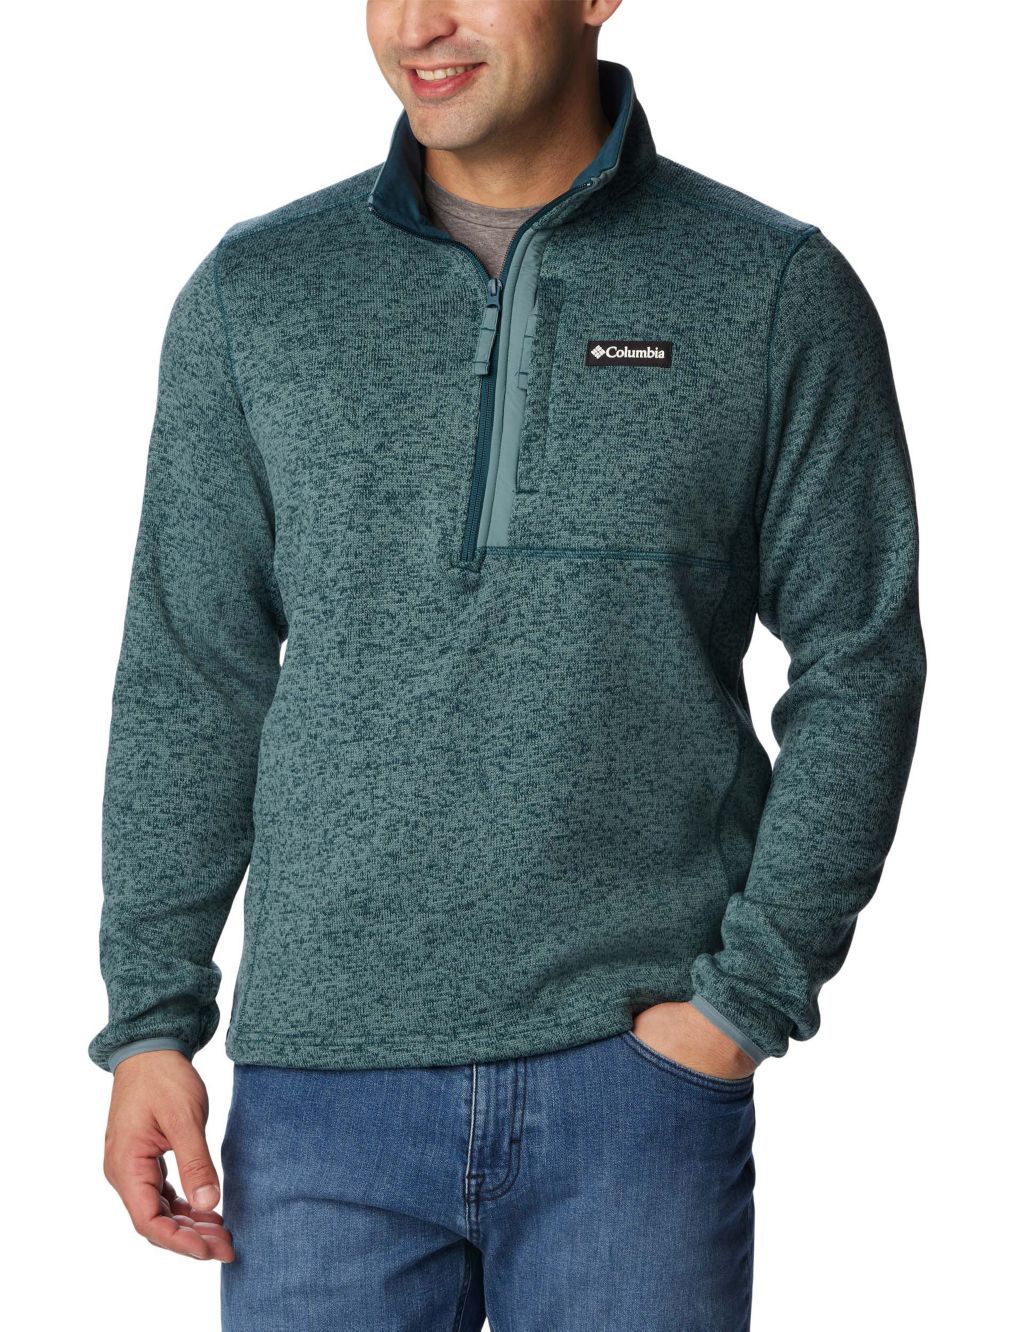 Sweater Weather Fleece Half Zip Jacket image 1